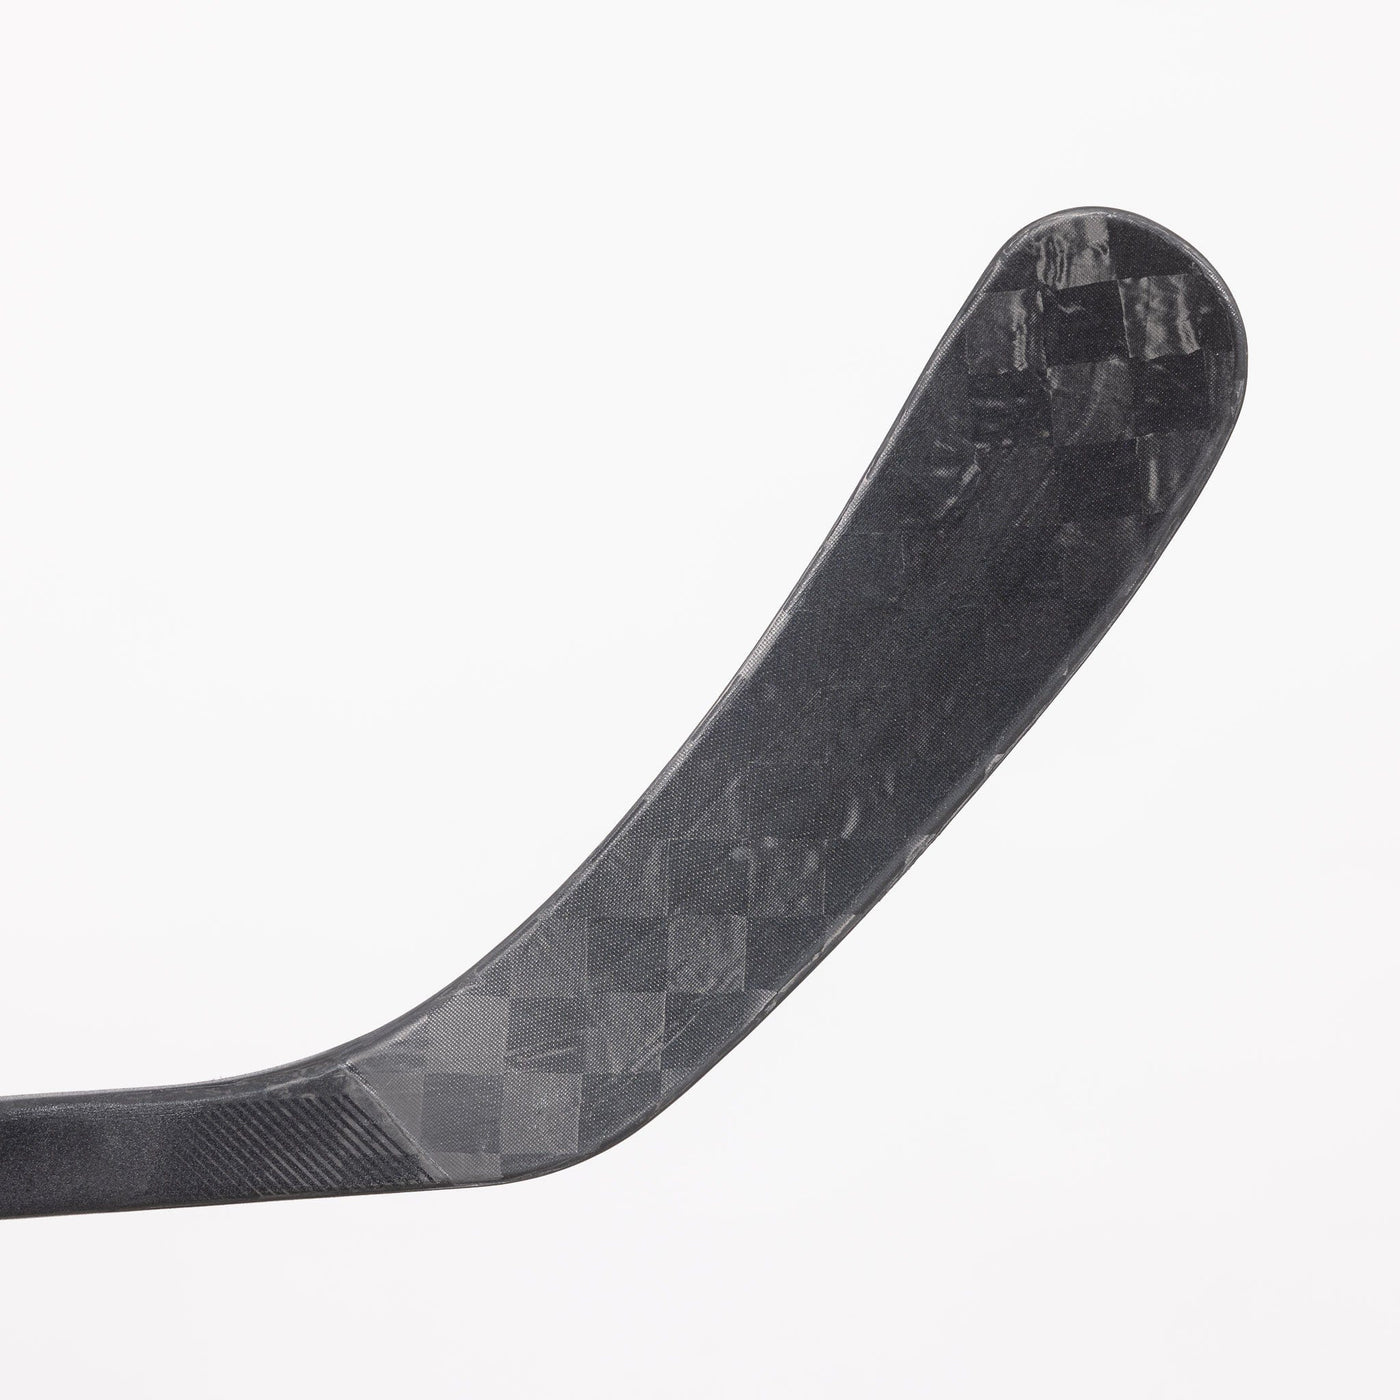 TRUE Project X Junior Hockey Stick - 50 Flex - The Hockey Shop Source For Sports